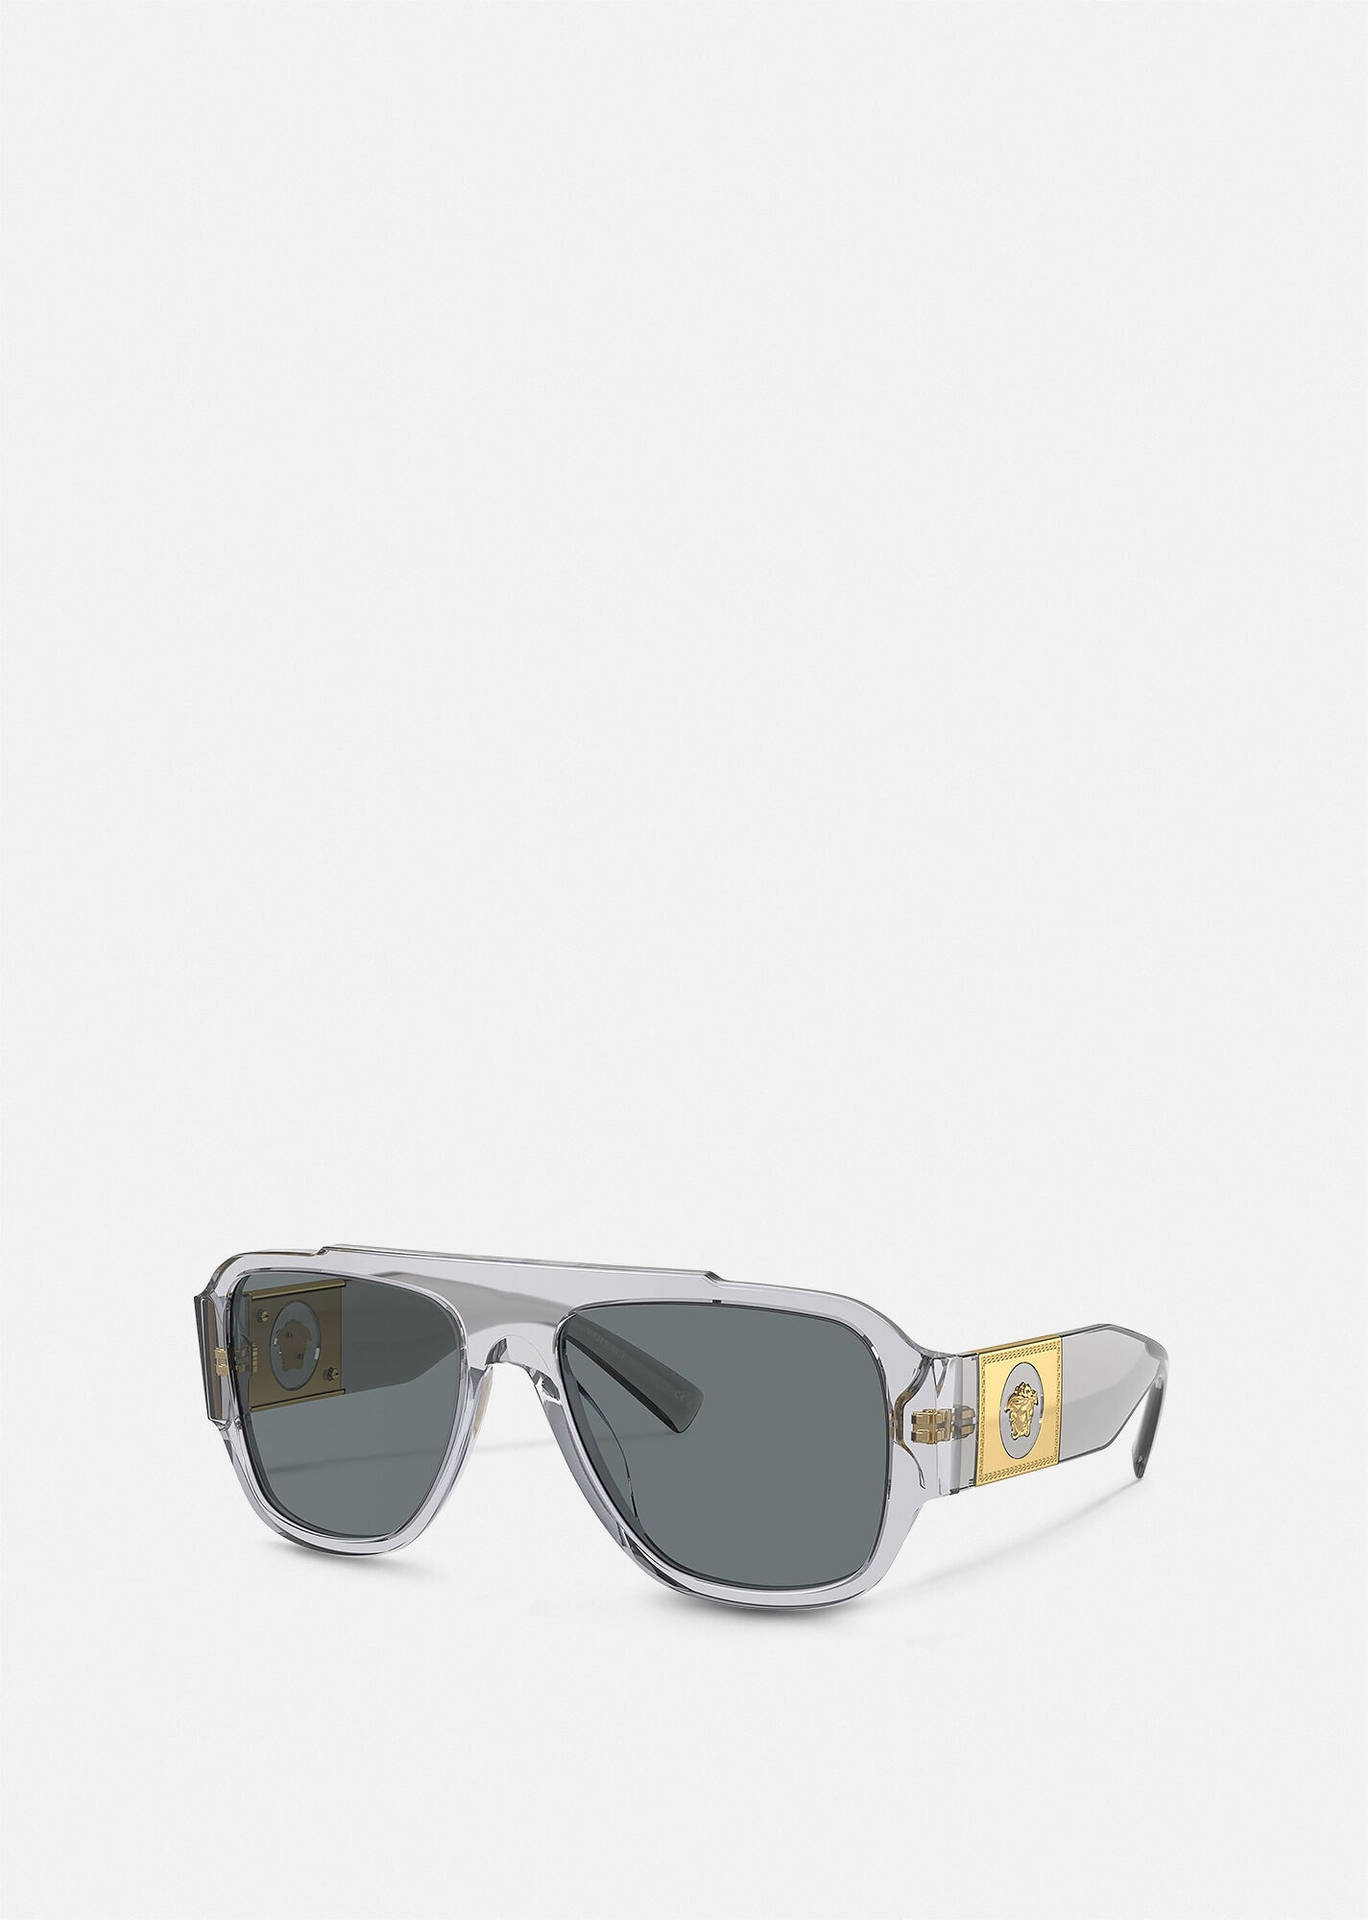 Versace Men's Macy Sunglasses Wallpaper